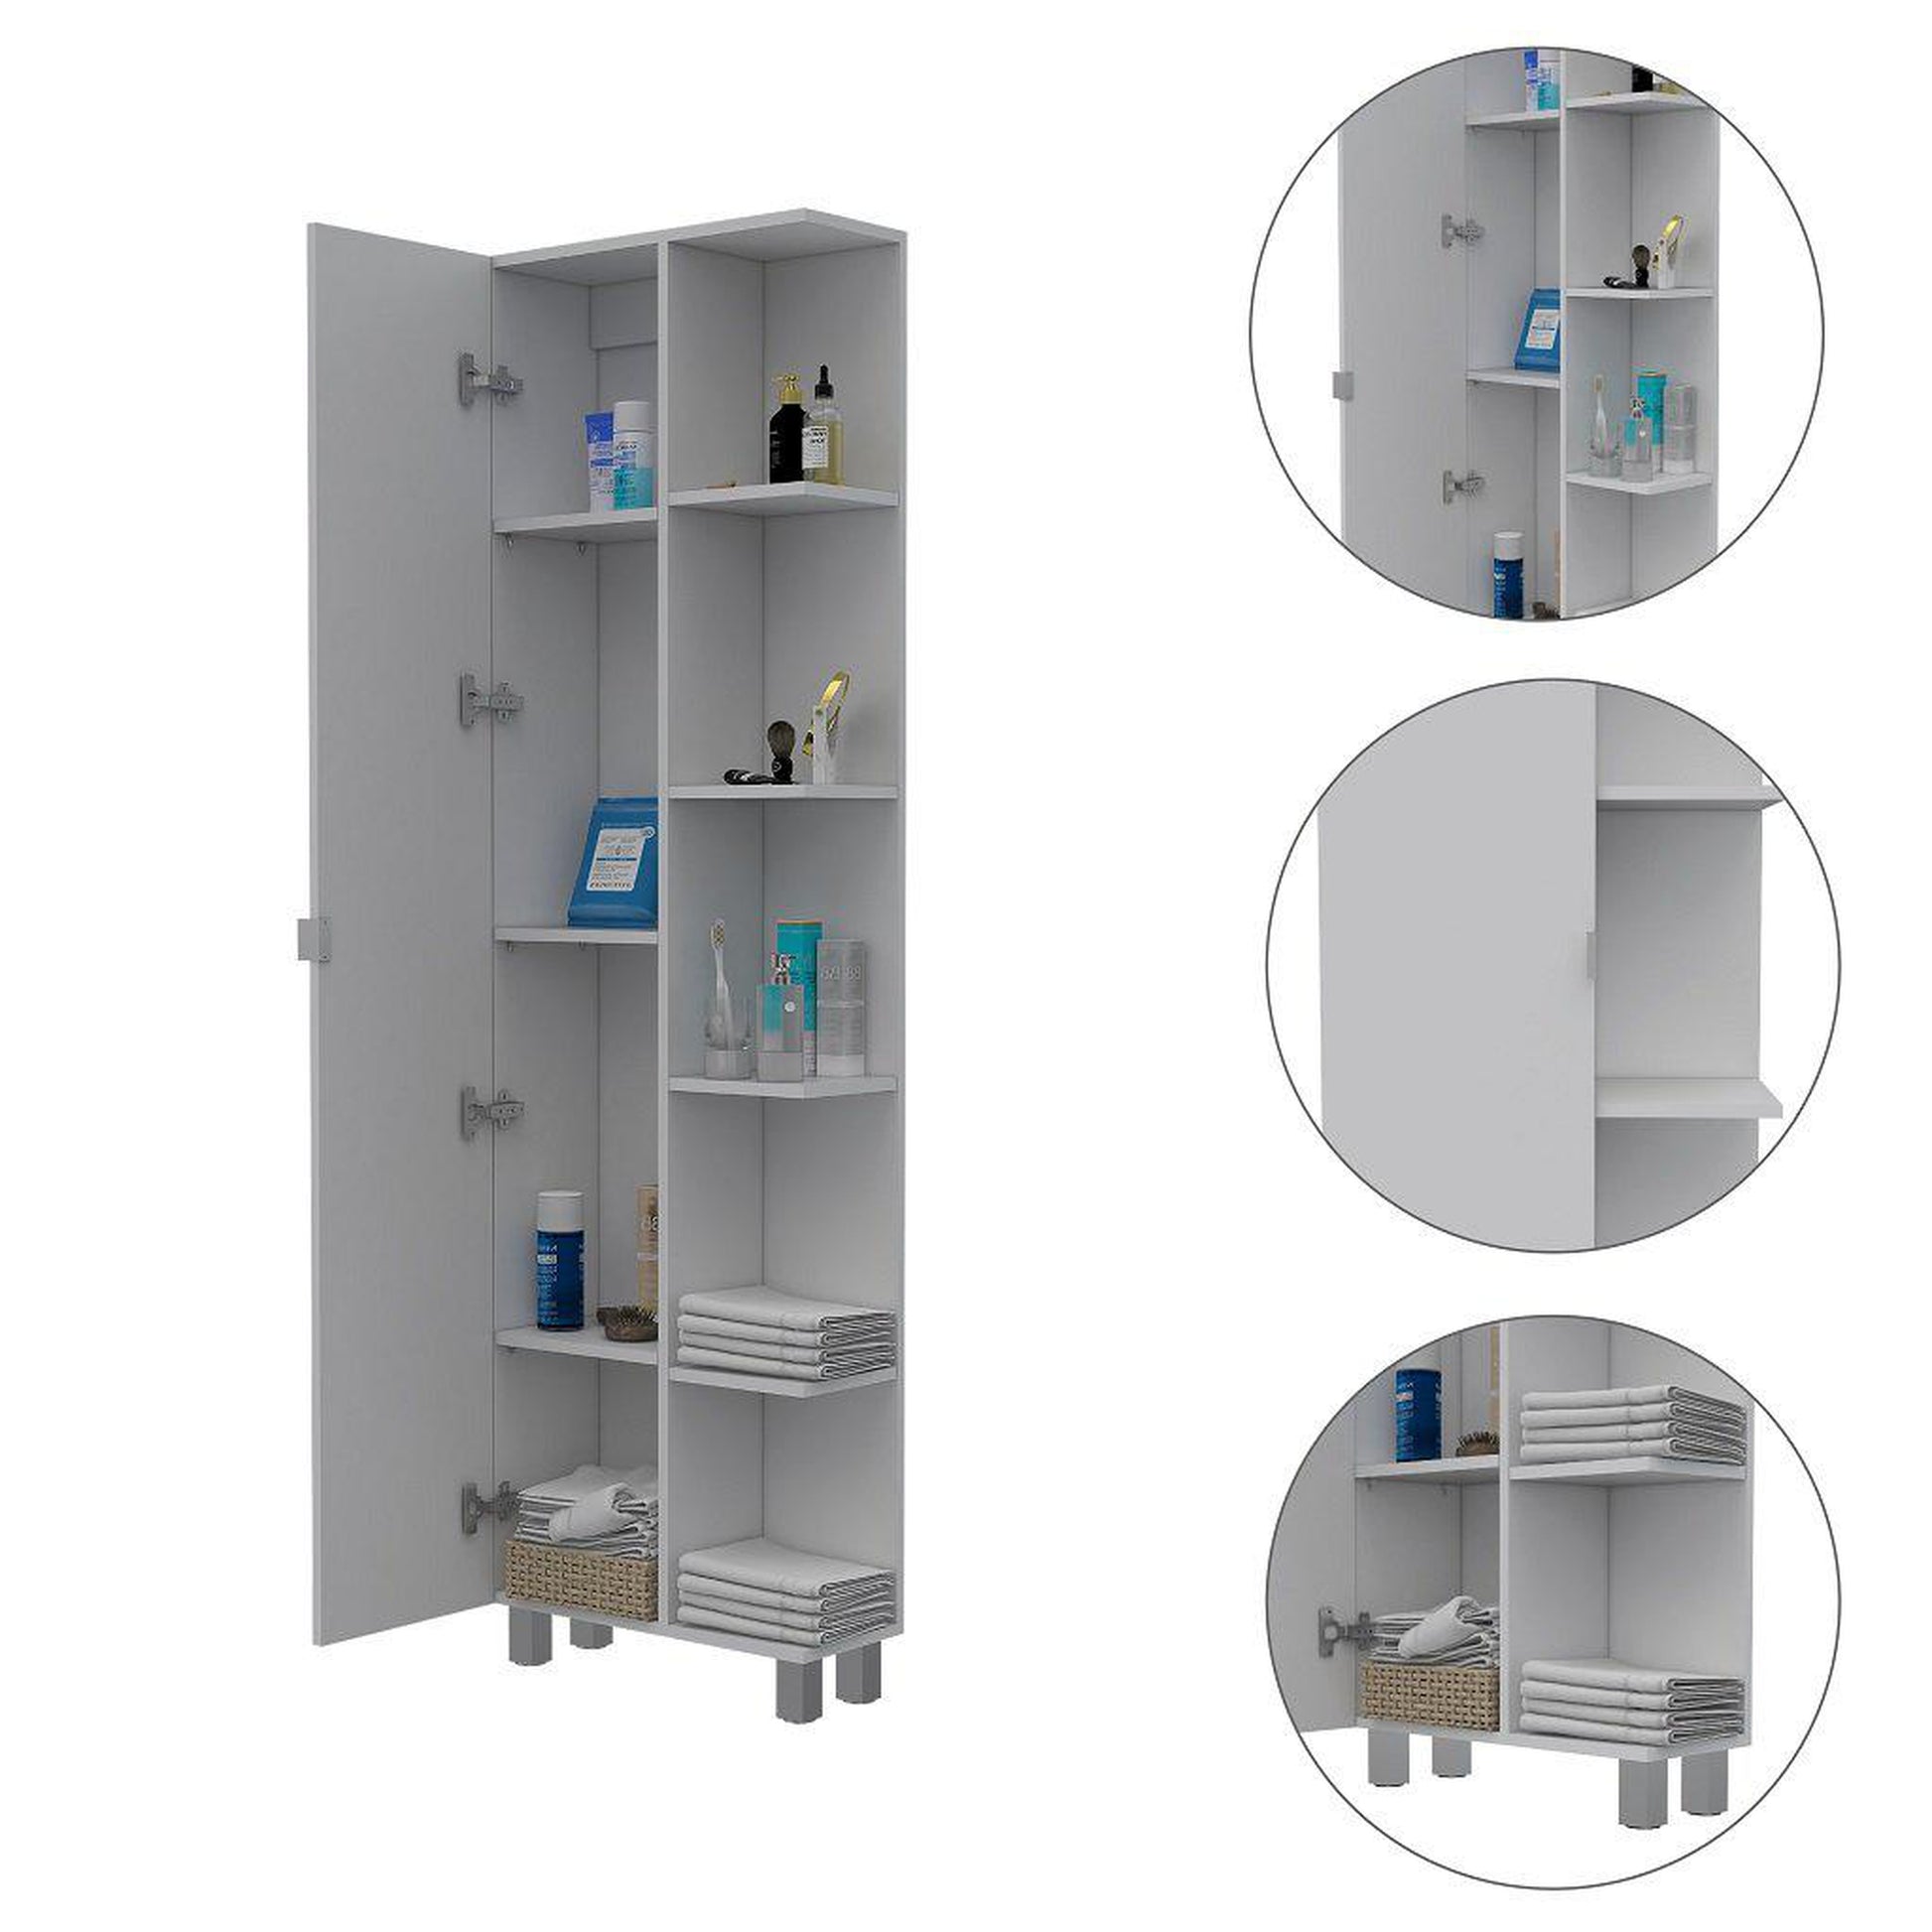 Tellisford Freestanding Bathroom Cabinet